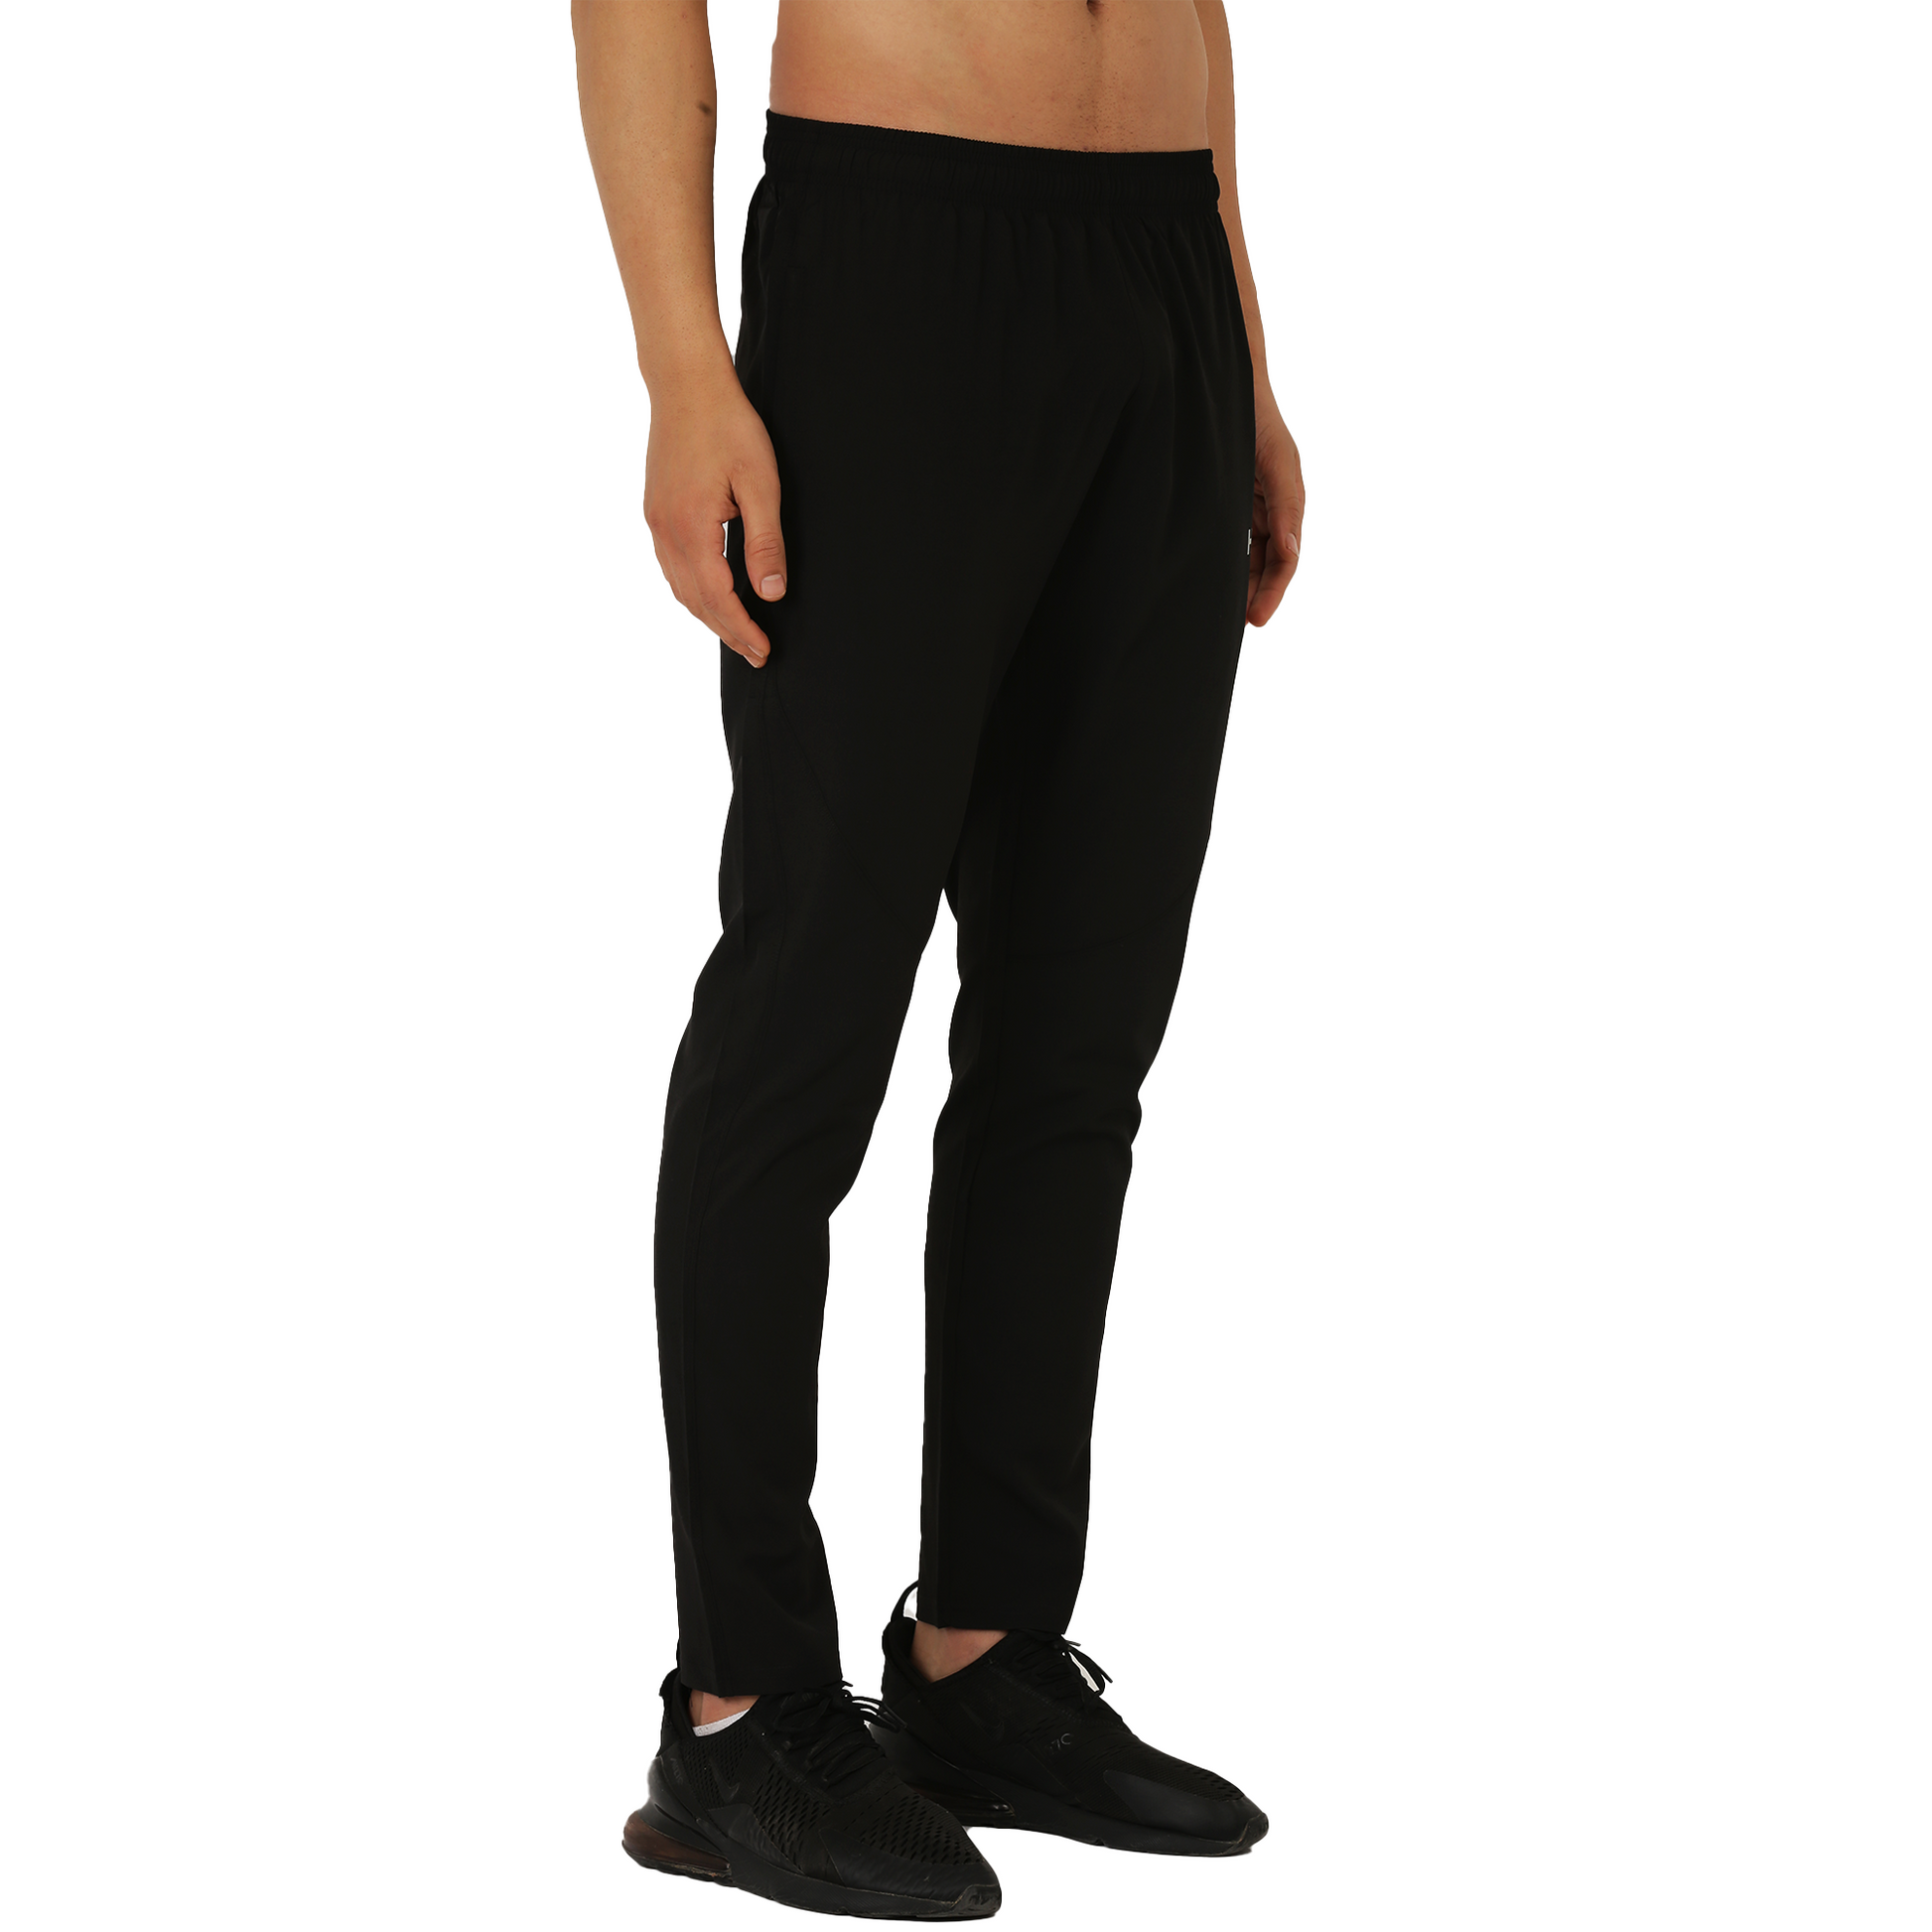 Adidas Warm Up Pants Size M Black with white Stripes Jogging Gym wear | eBay